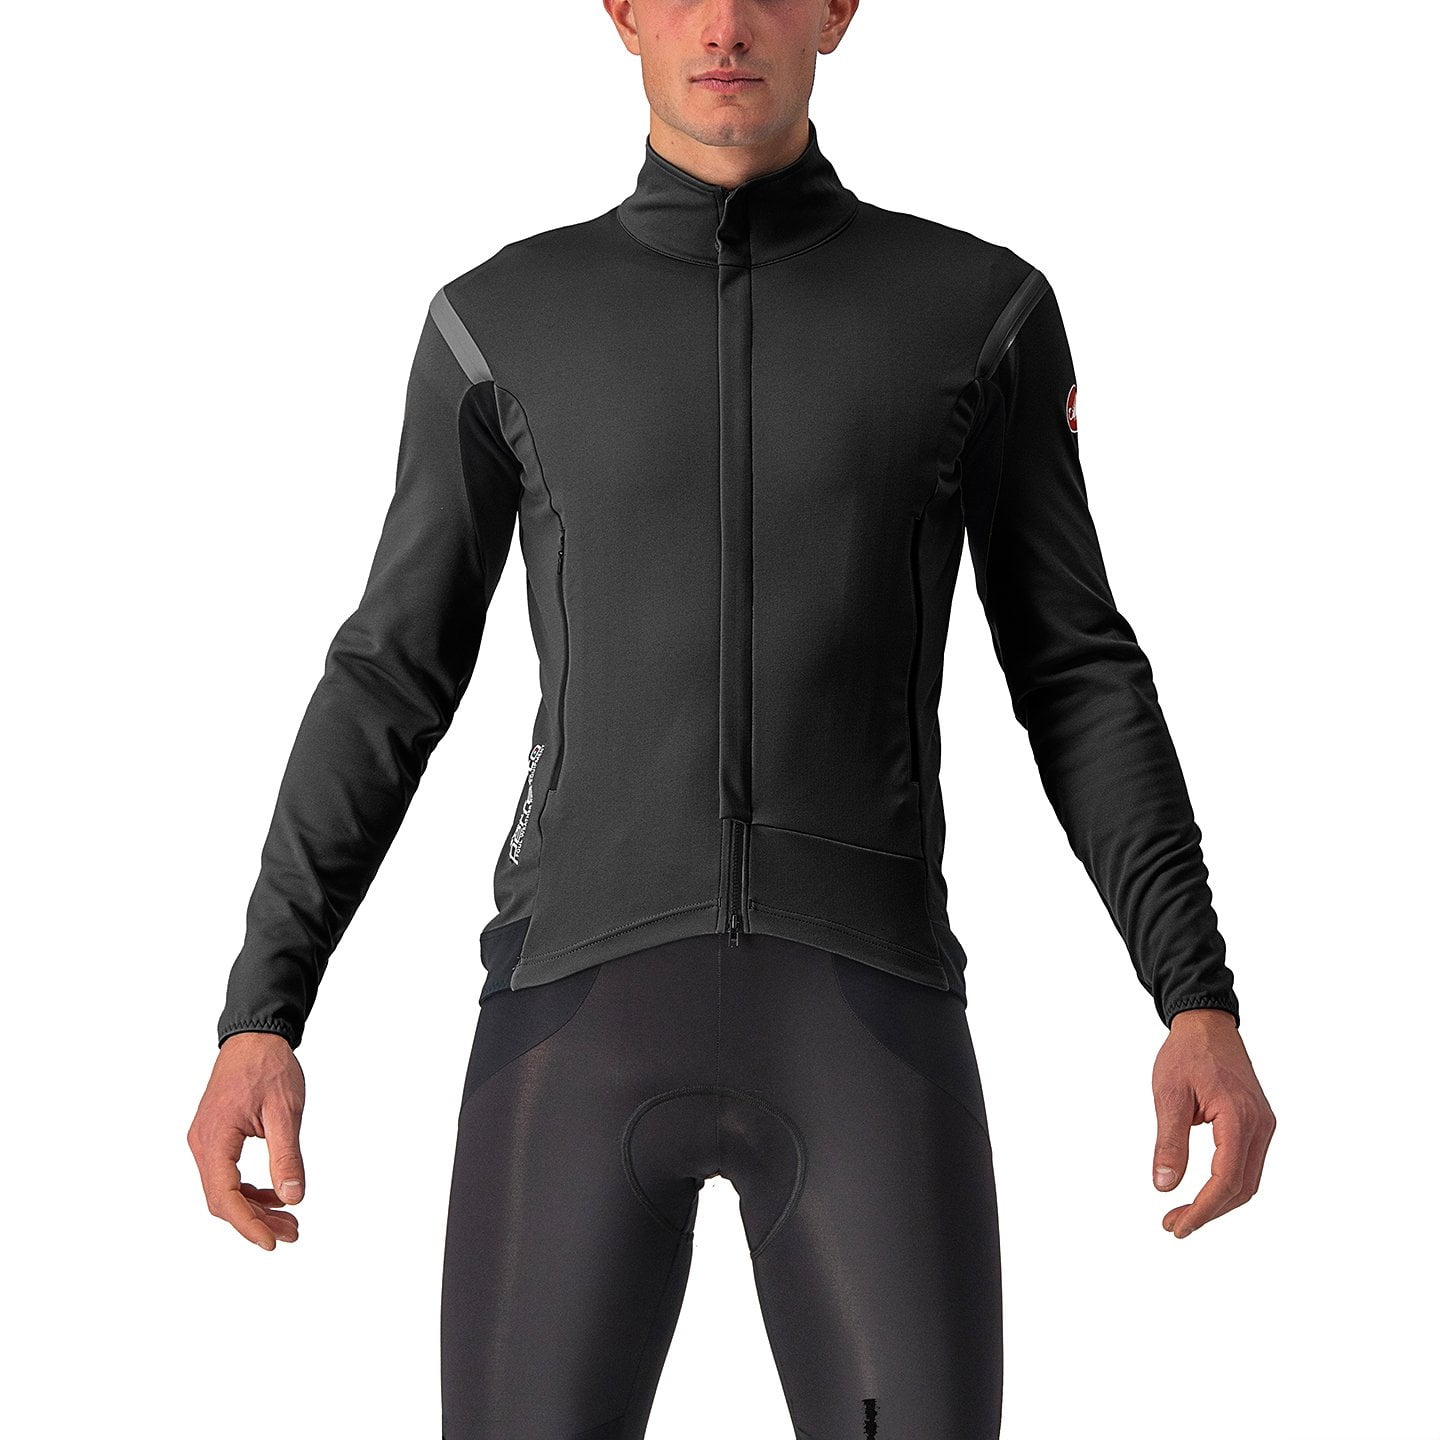 CASTELLI Perfetto RoS 2 Light Jacket Light Jacket, for men, size 2XL, Cycle jacket, Cycling clothing